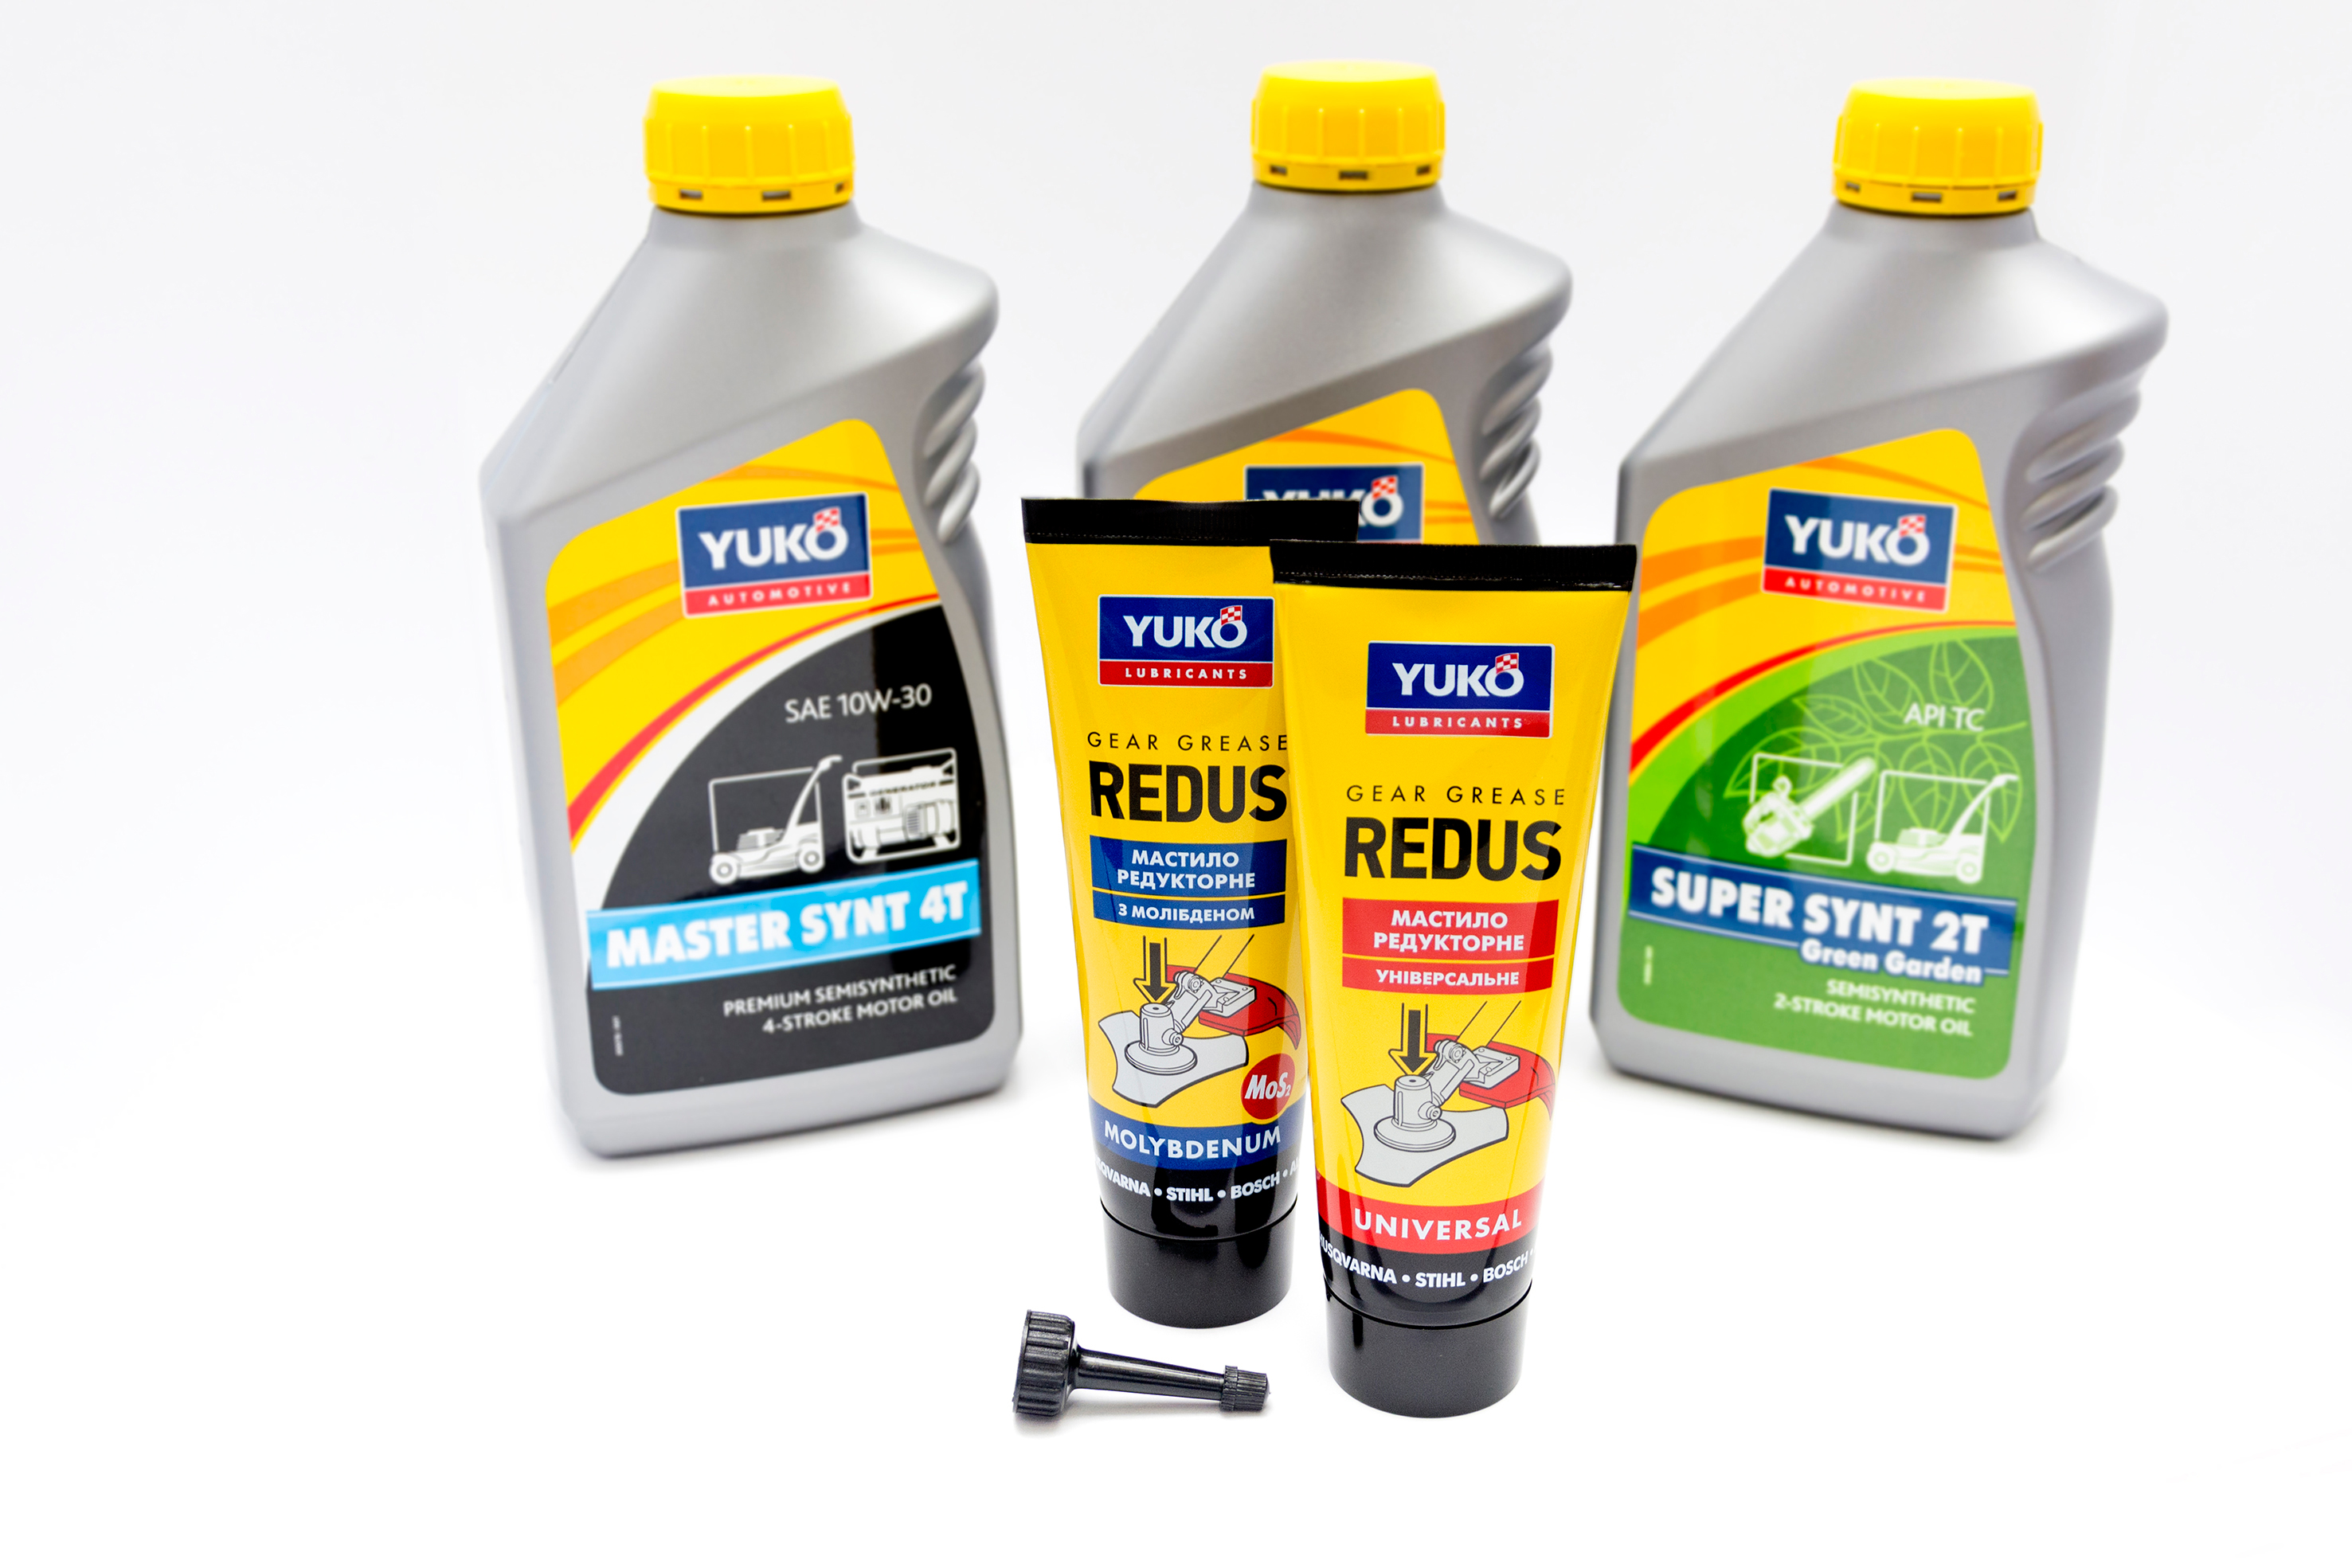 YUKO REDUS - NEW gear greases for garden equipment